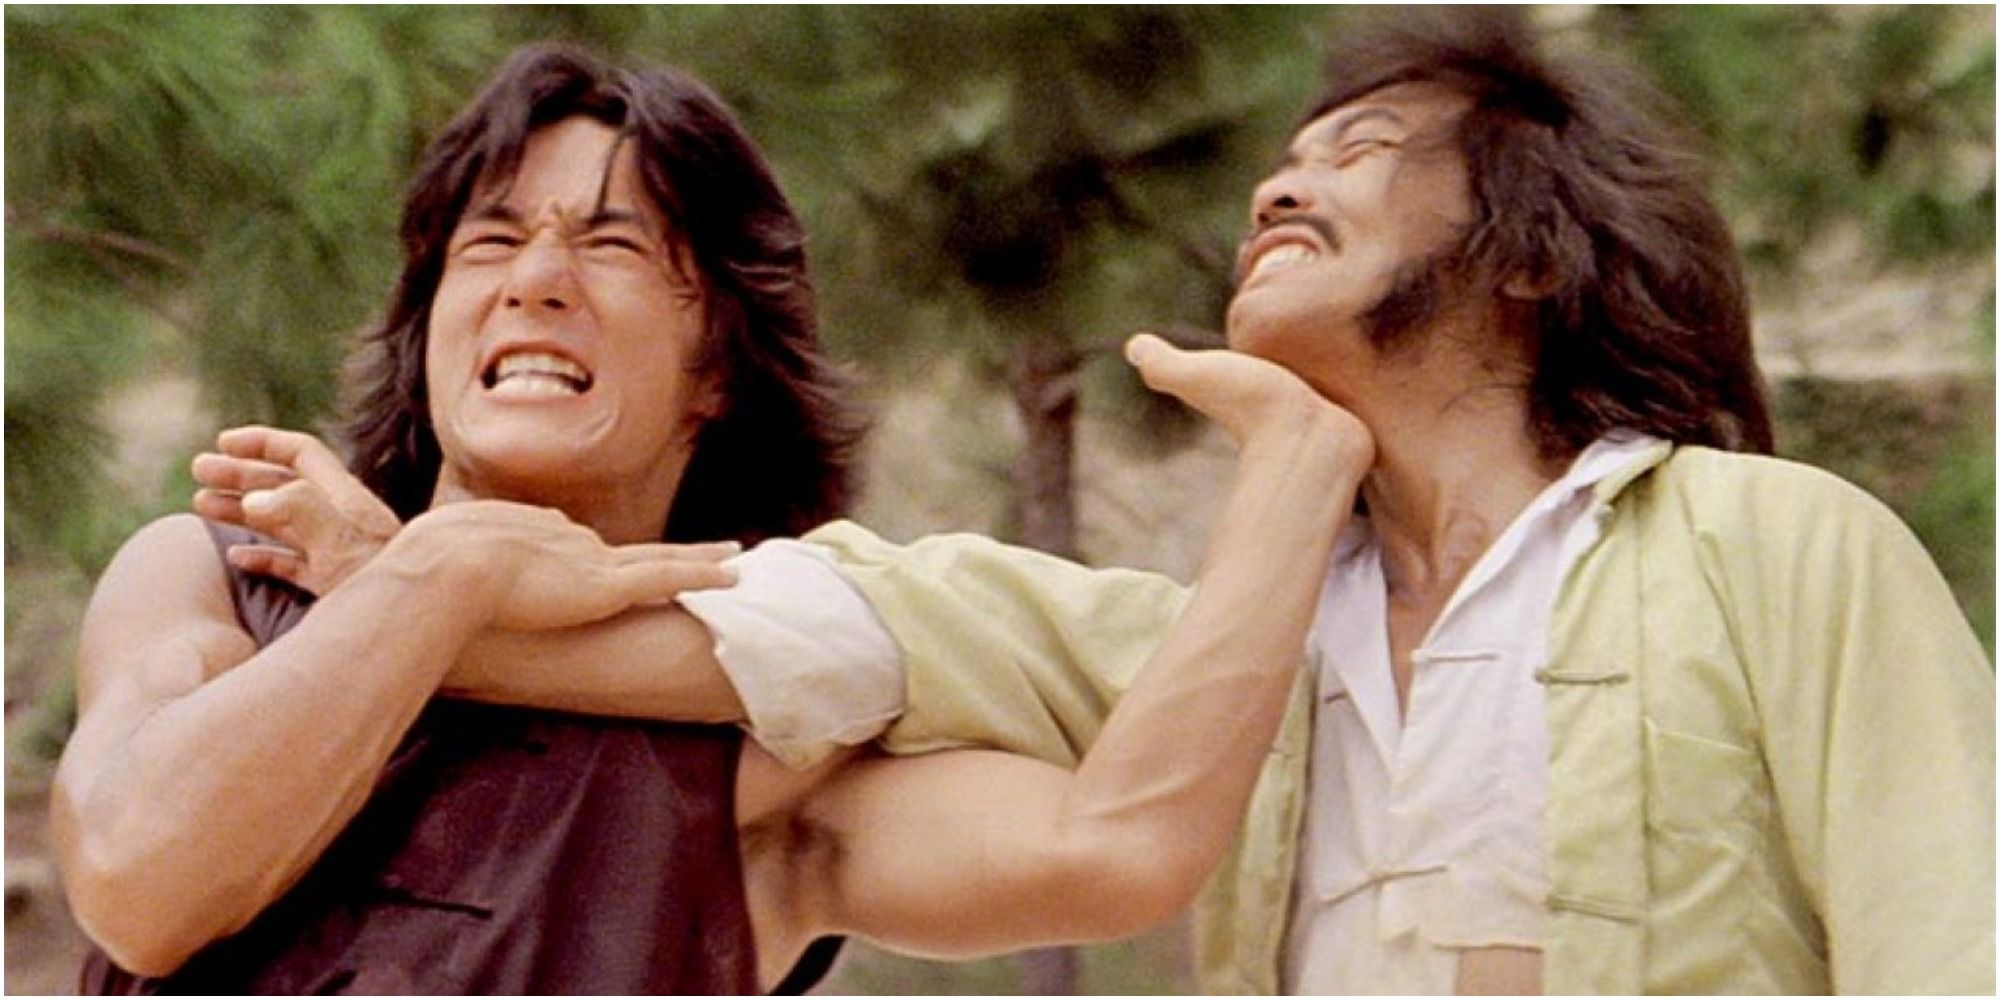 Jackie Chan battles an opponent outside in the film Drunken Master.